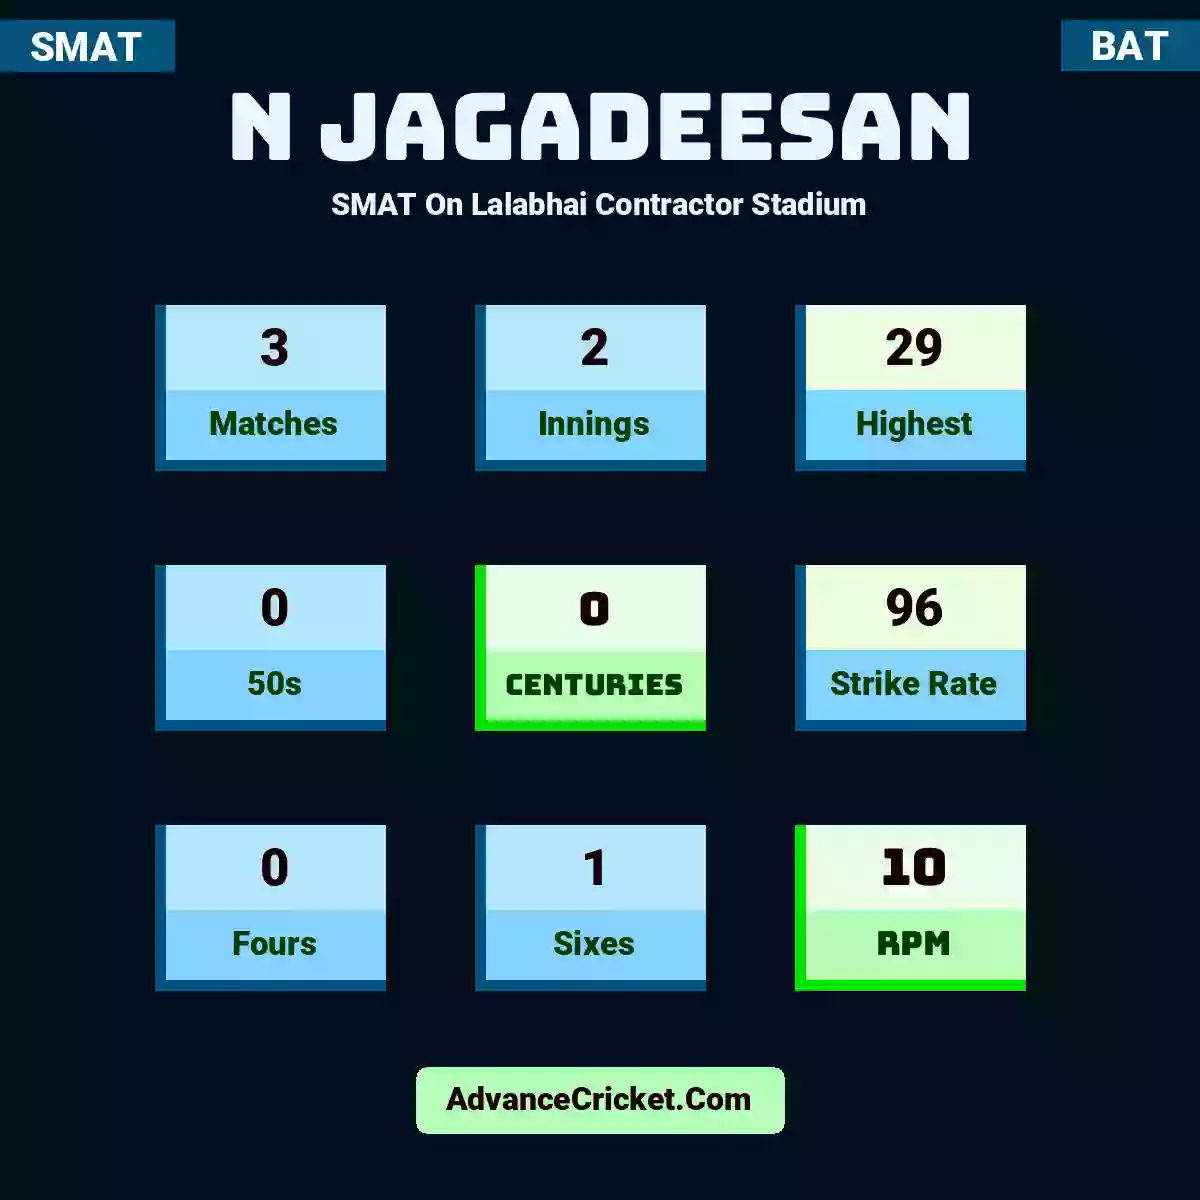 N Jagadeesan SMAT  On Lalabhai Contractor Stadium, N Jagadeesan played 3 matches, scored 29 runs as highest, 0 half-centuries, and 0 centuries, with a strike rate of 96. N.Jagadeesan hit 0 fours and 1 sixes, with an RPM of 10.